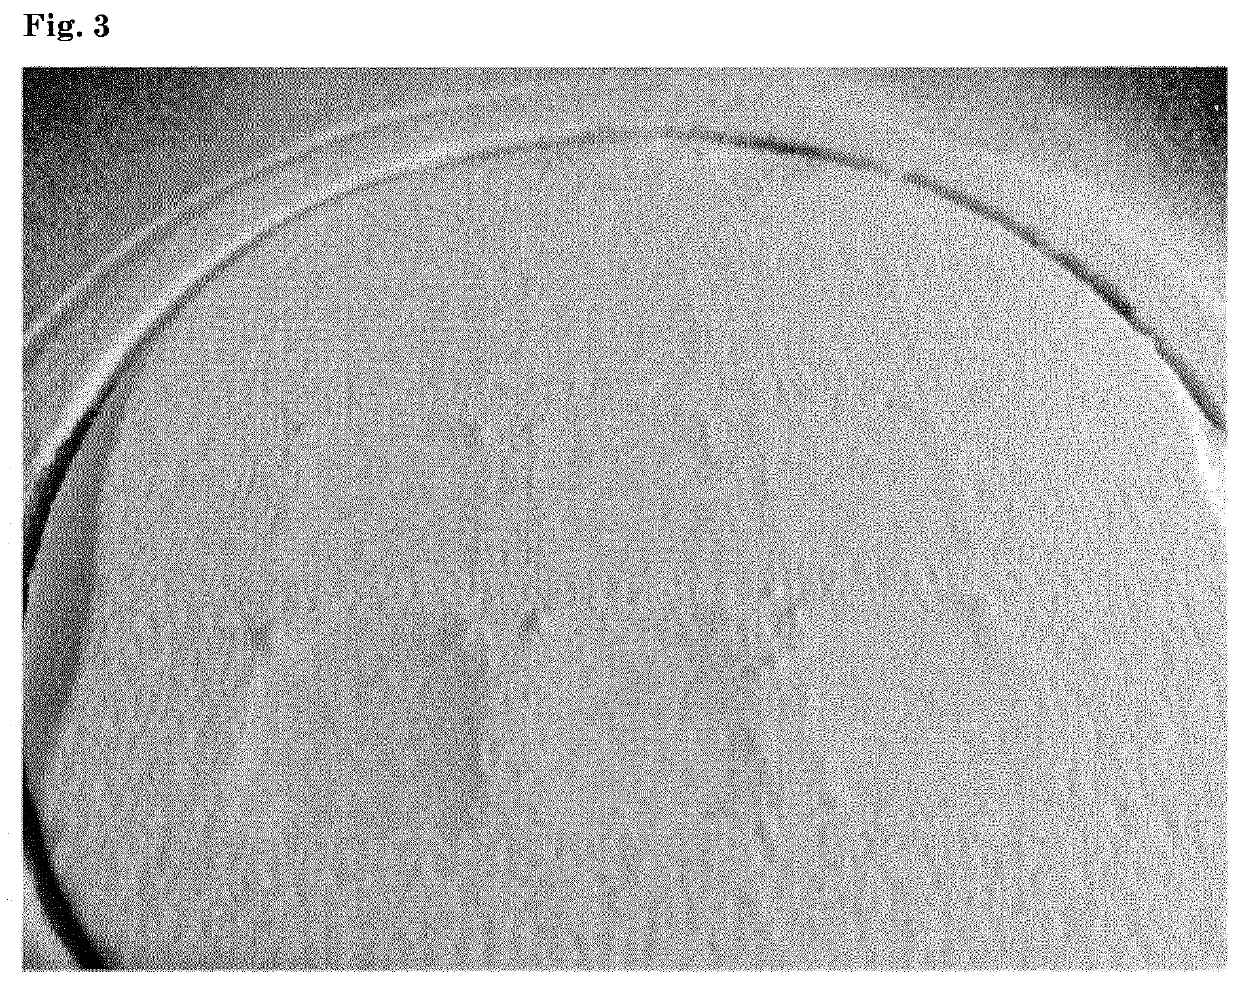 Lactose powder bed three dimensional printing